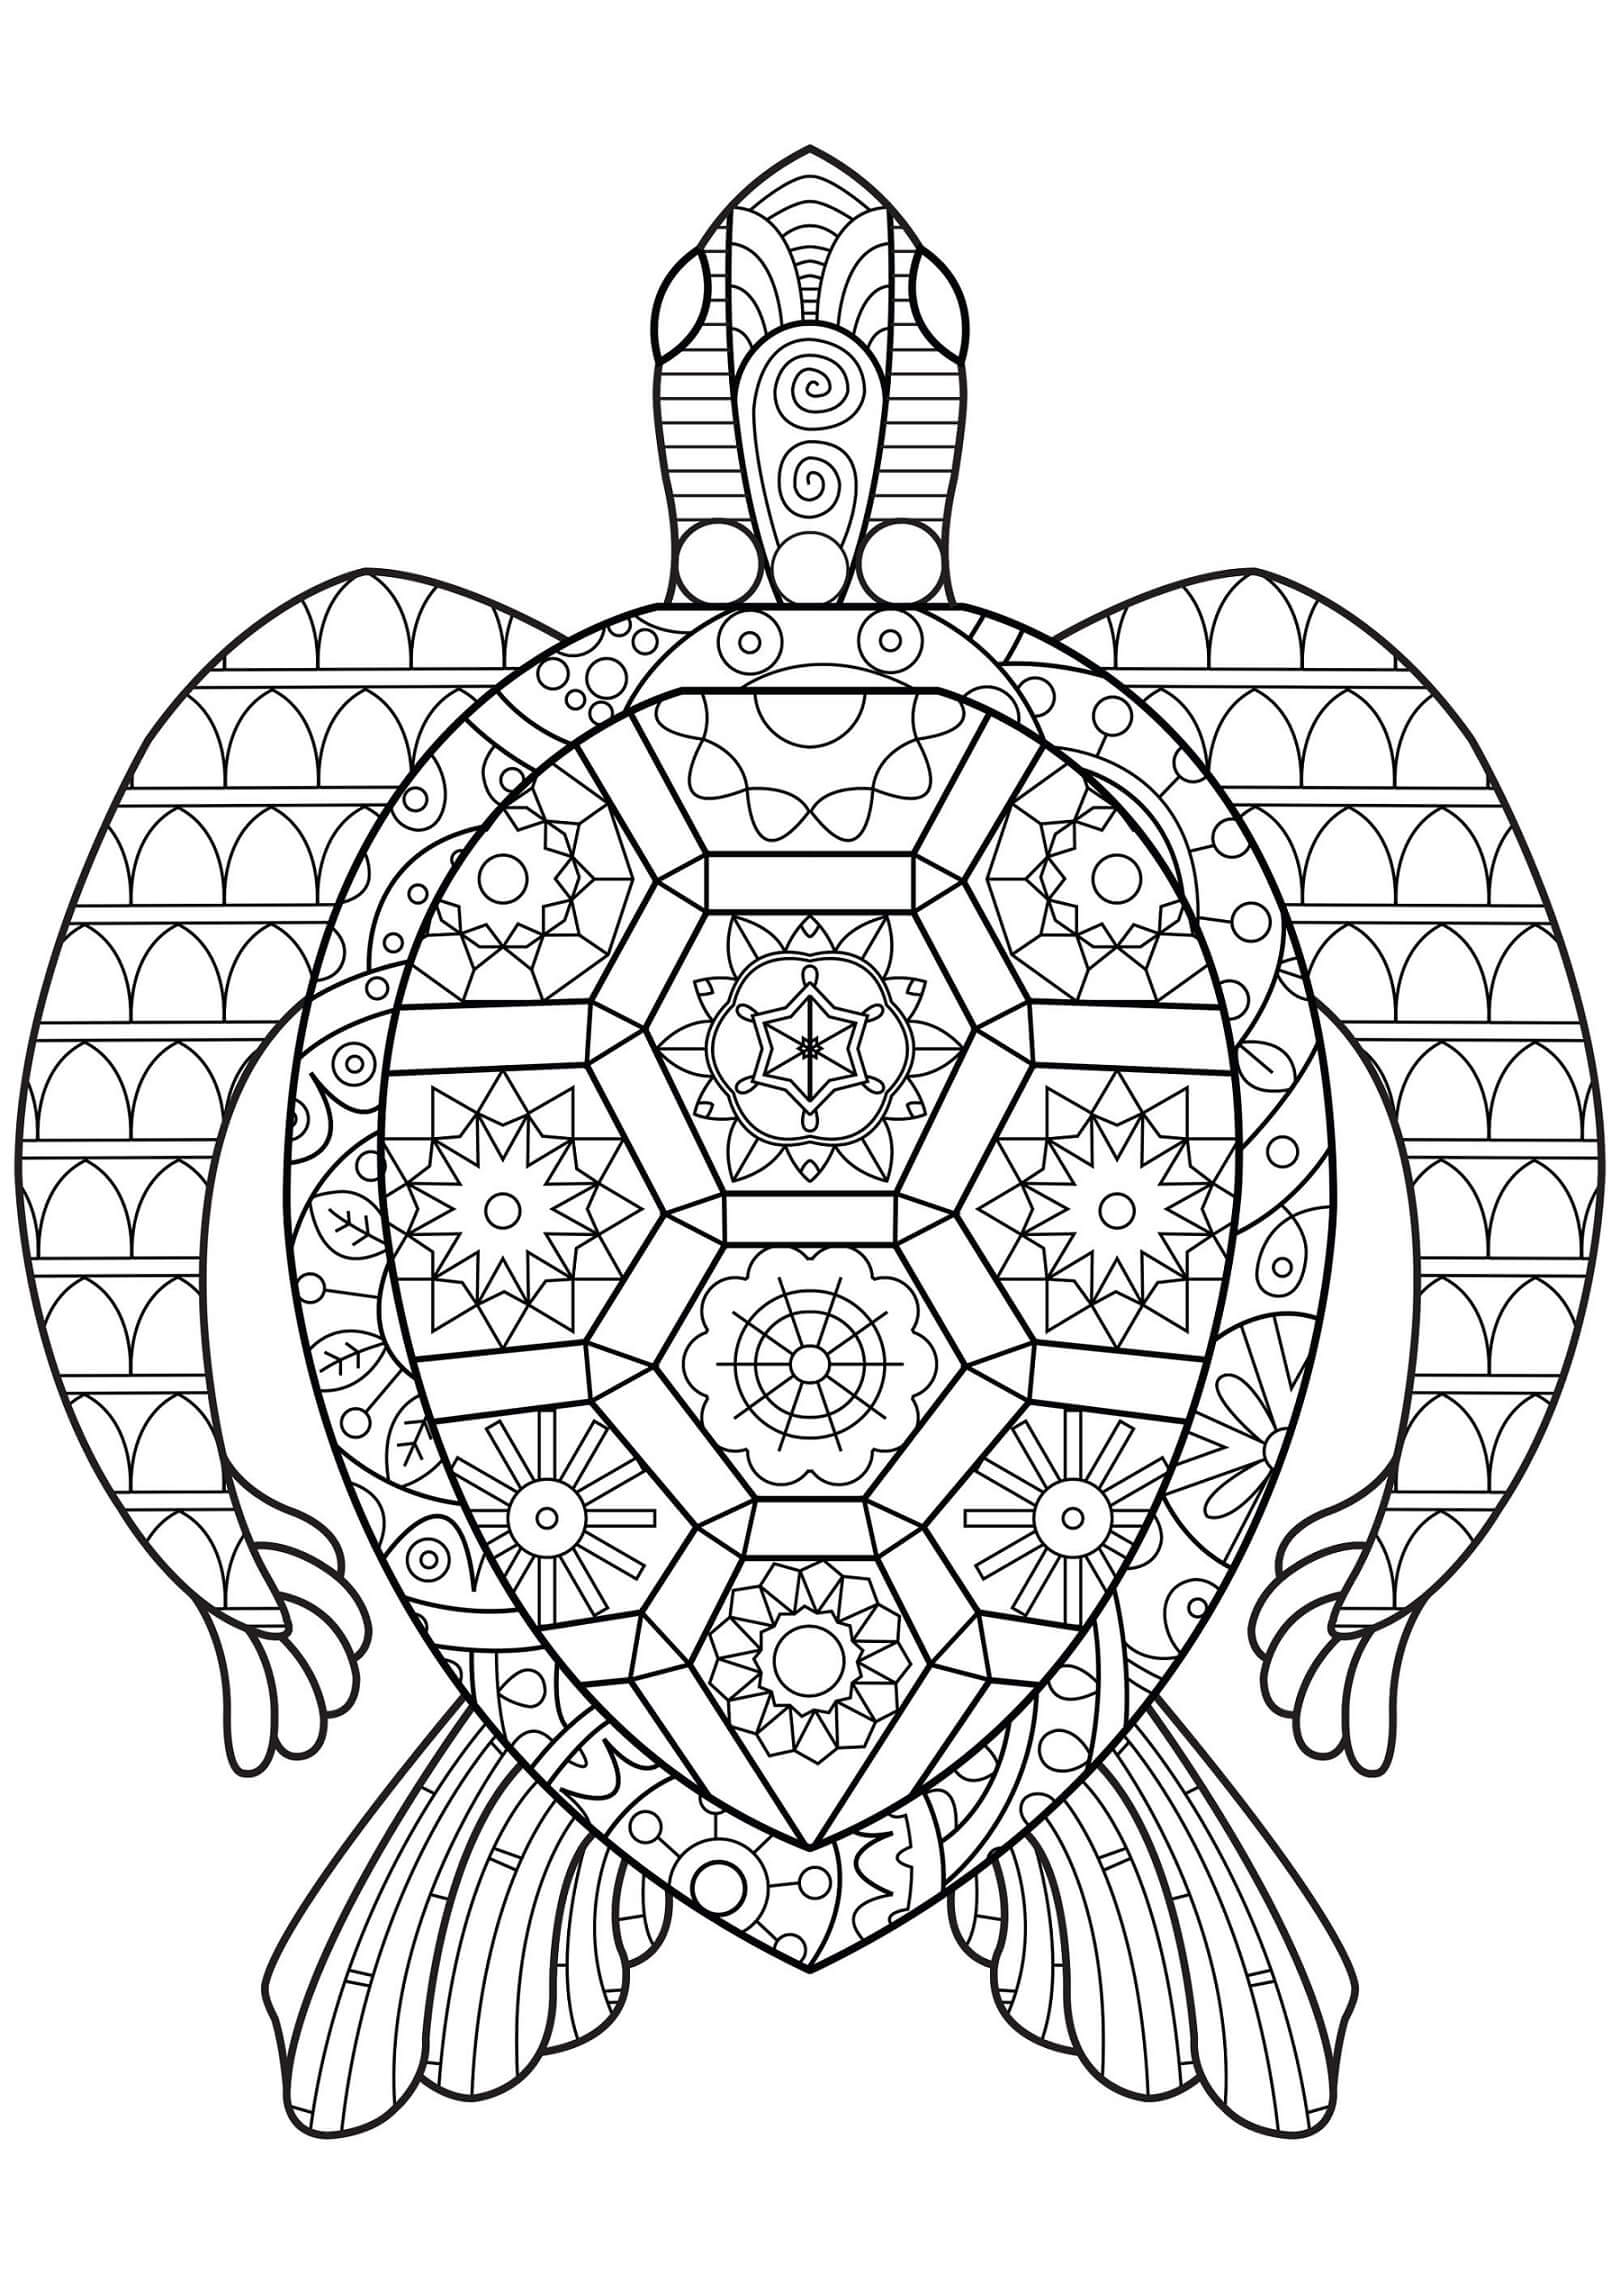 Mandala Turtle Coloring Page - Sheet 2 Mandalas